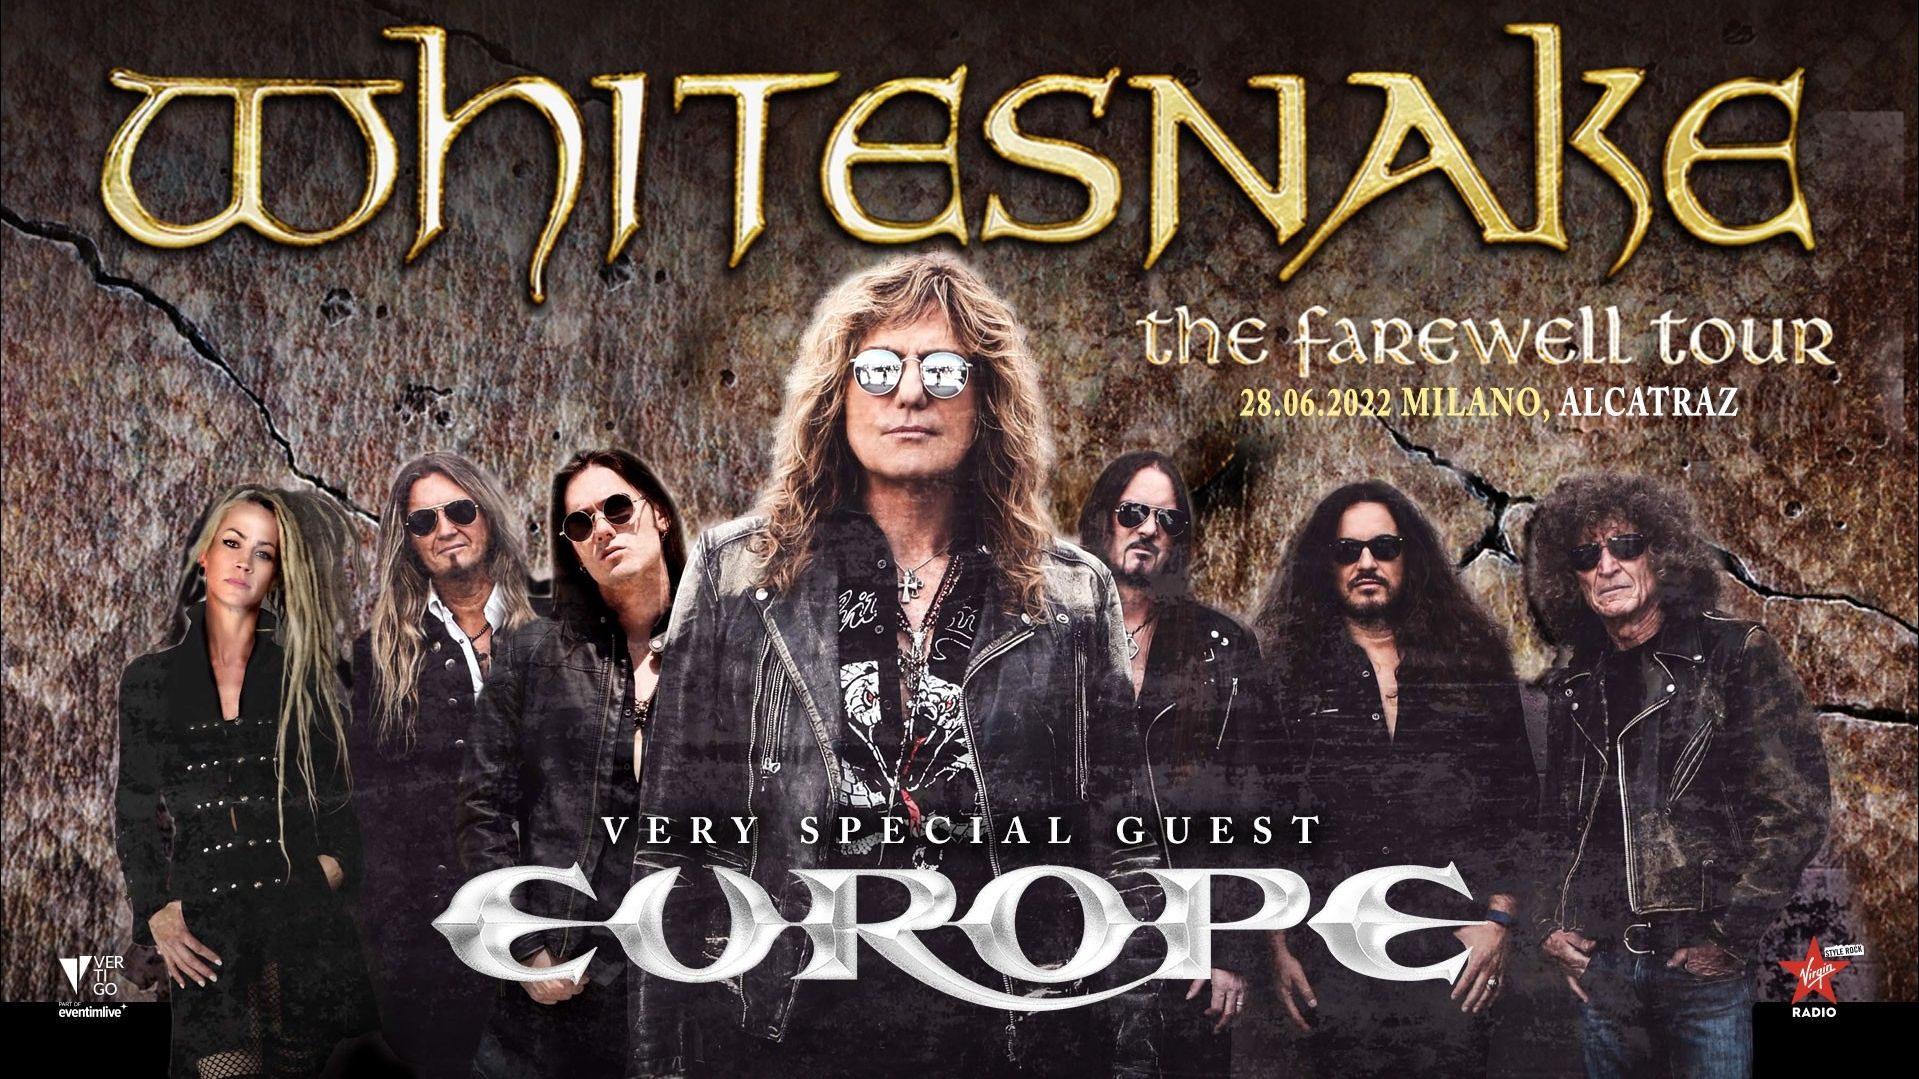 Whitesnake + Europe